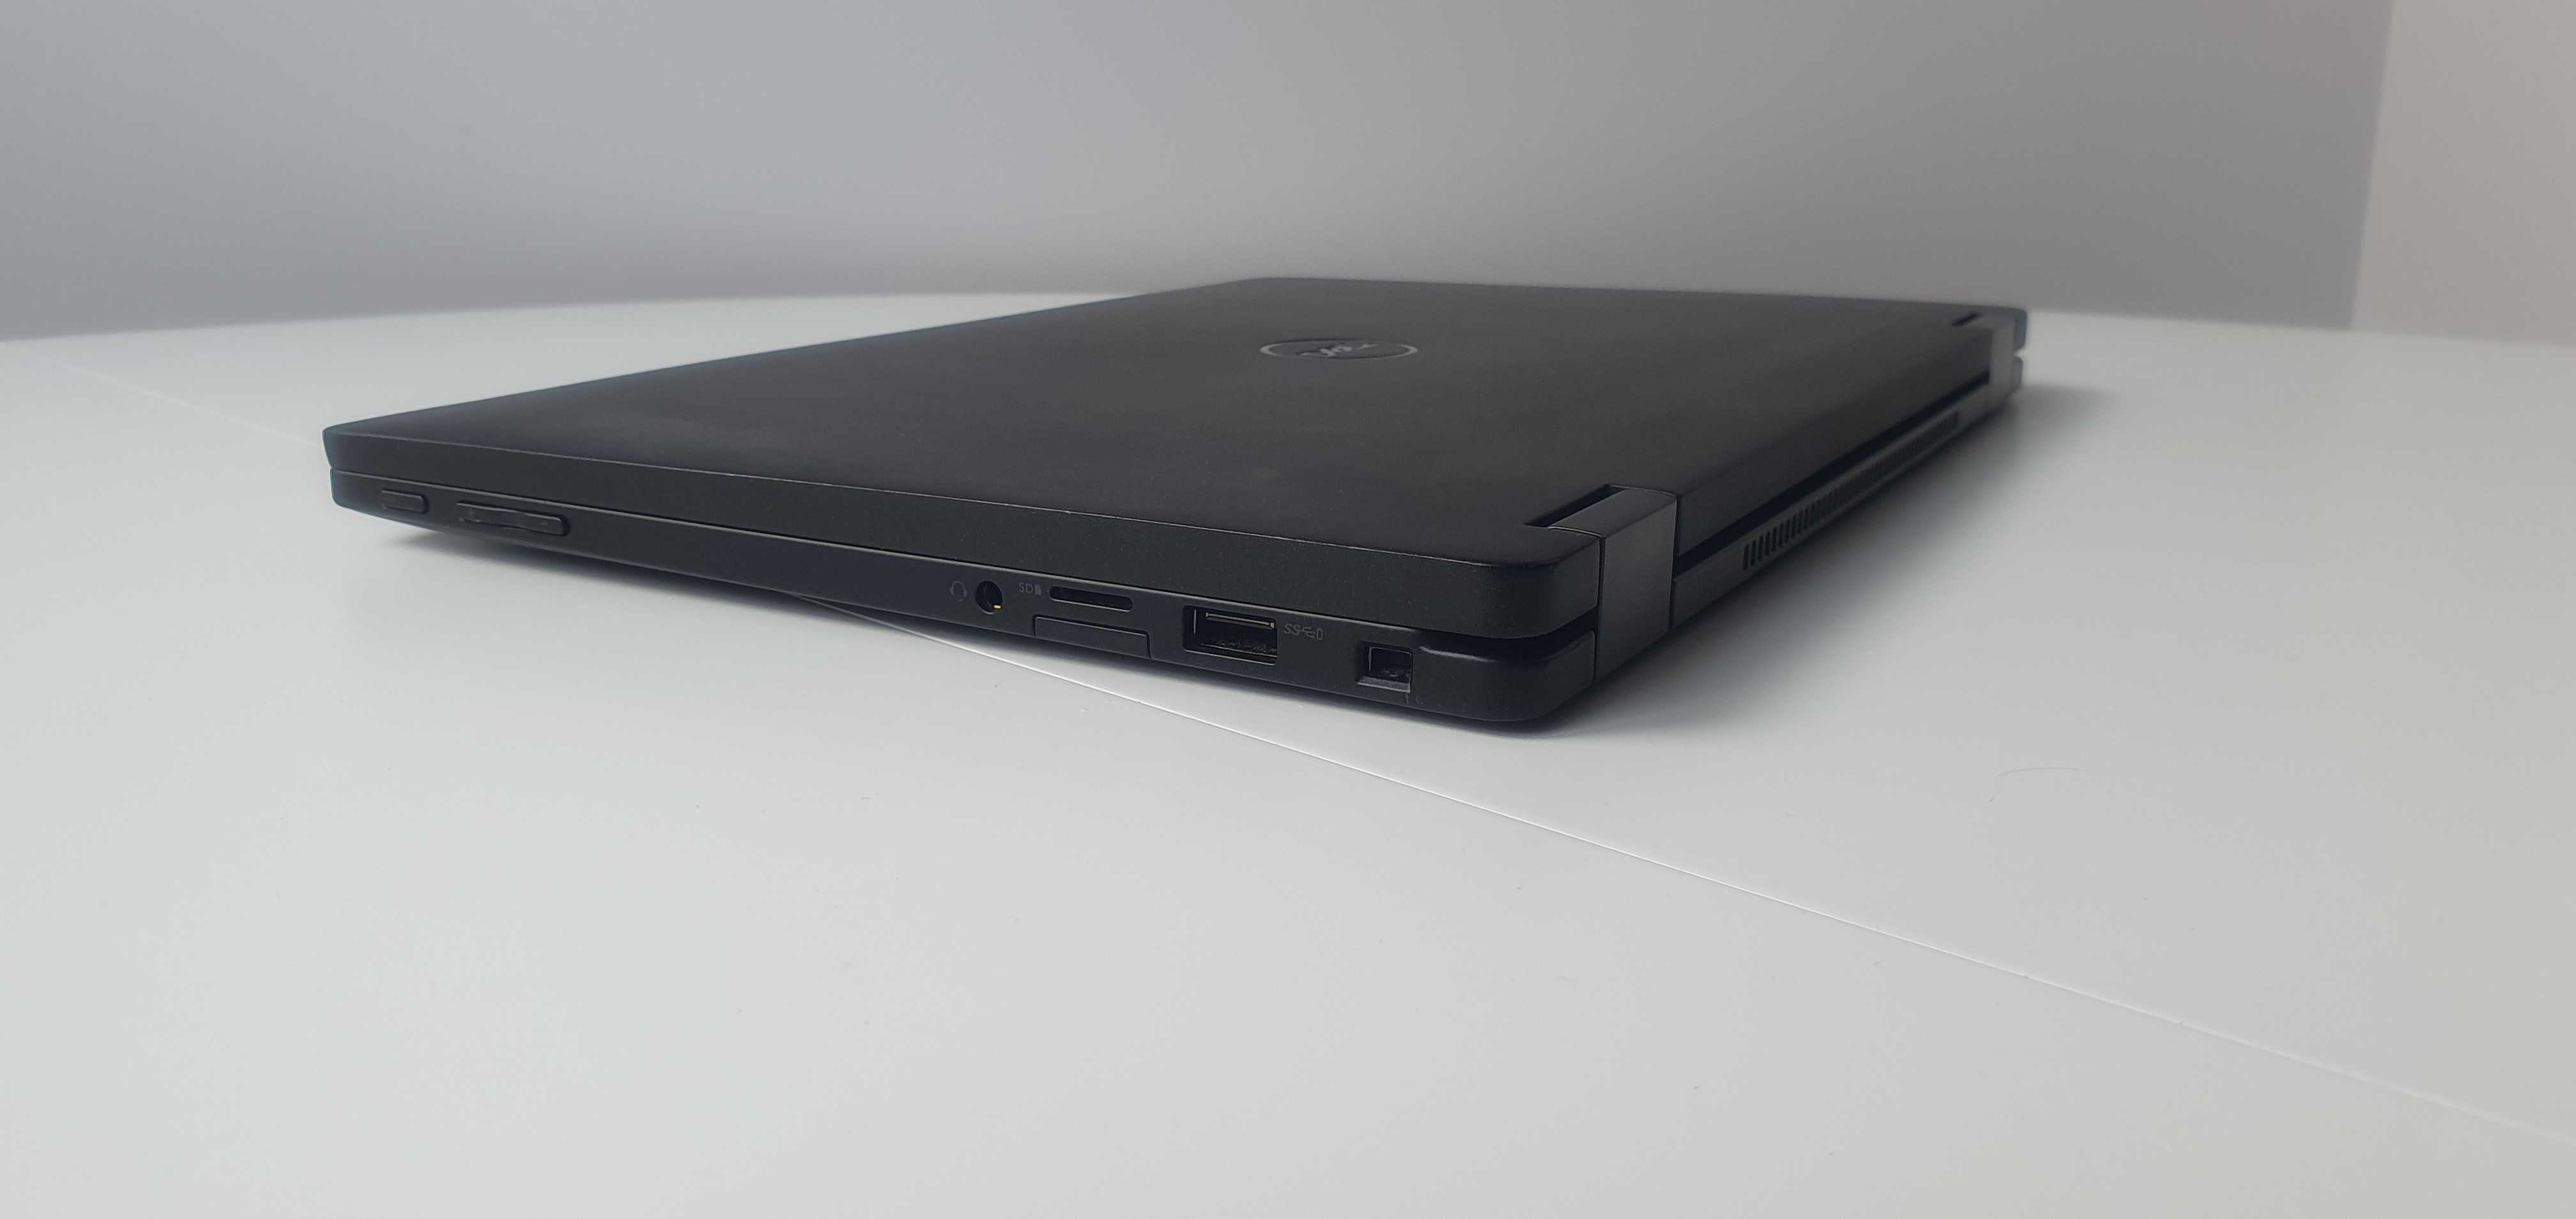 Как Новый! Ультрабук ноутбук Dell 7390 2in1 i5 SSD FHD IPS Touch №5